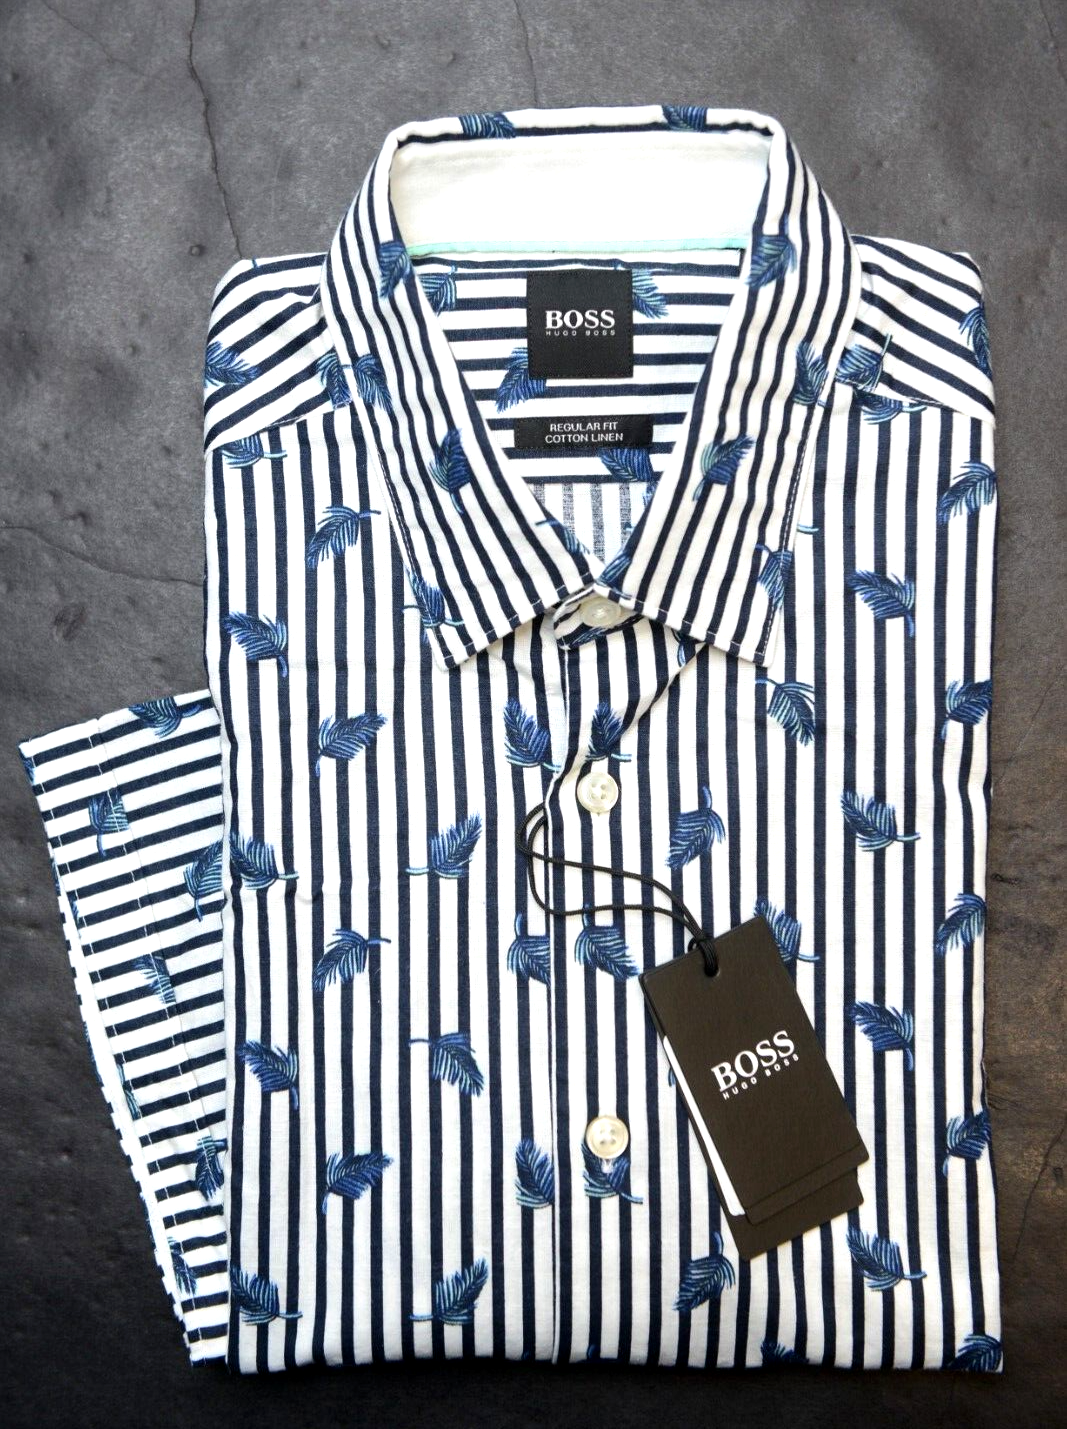 Primary image for Hugo Boss Men's Luka Short Sleeve Regular Fit Feather Print Cotton/Linen Shirt s